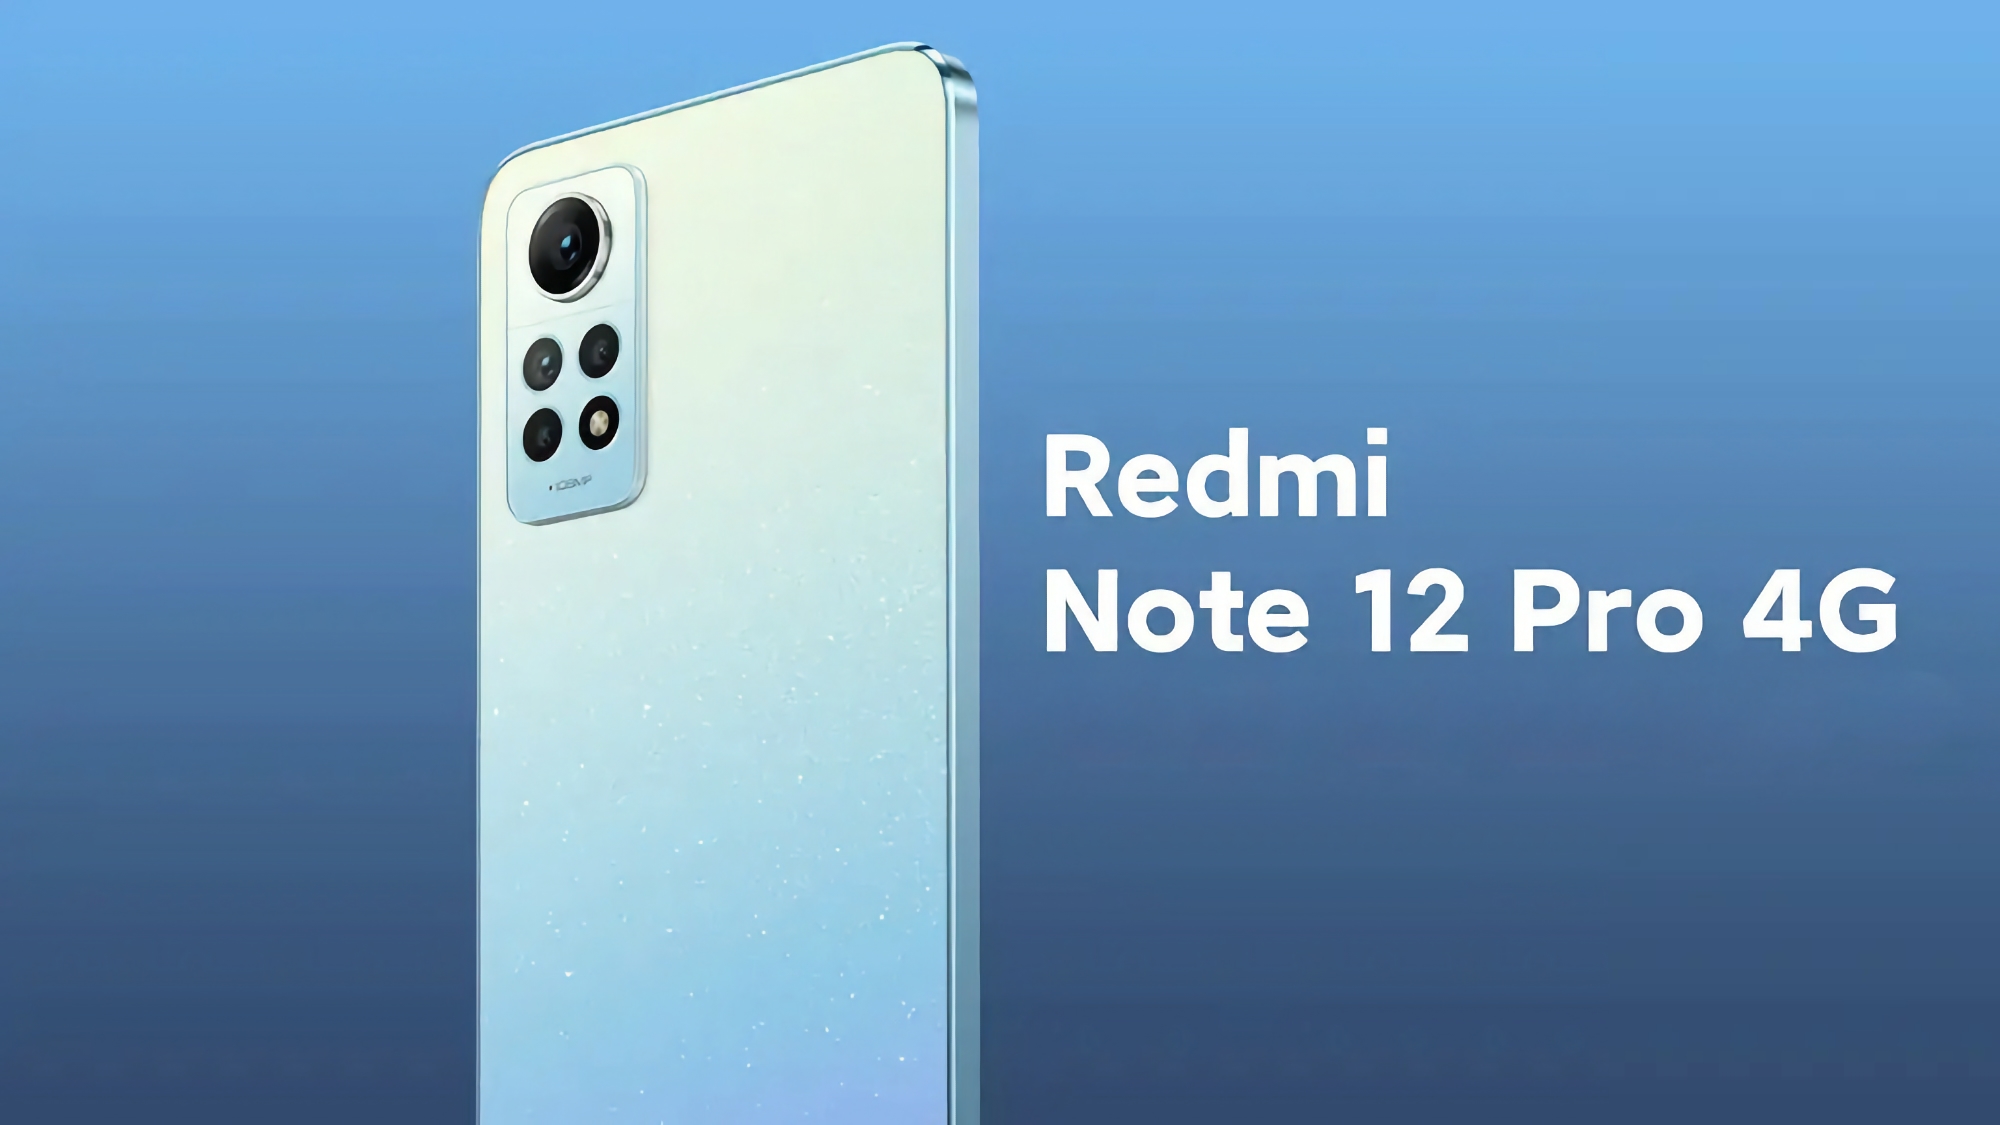 Xiaomi Redmi Note 12 Pro 8/256GB Snapdragon 732G 67W 6.67